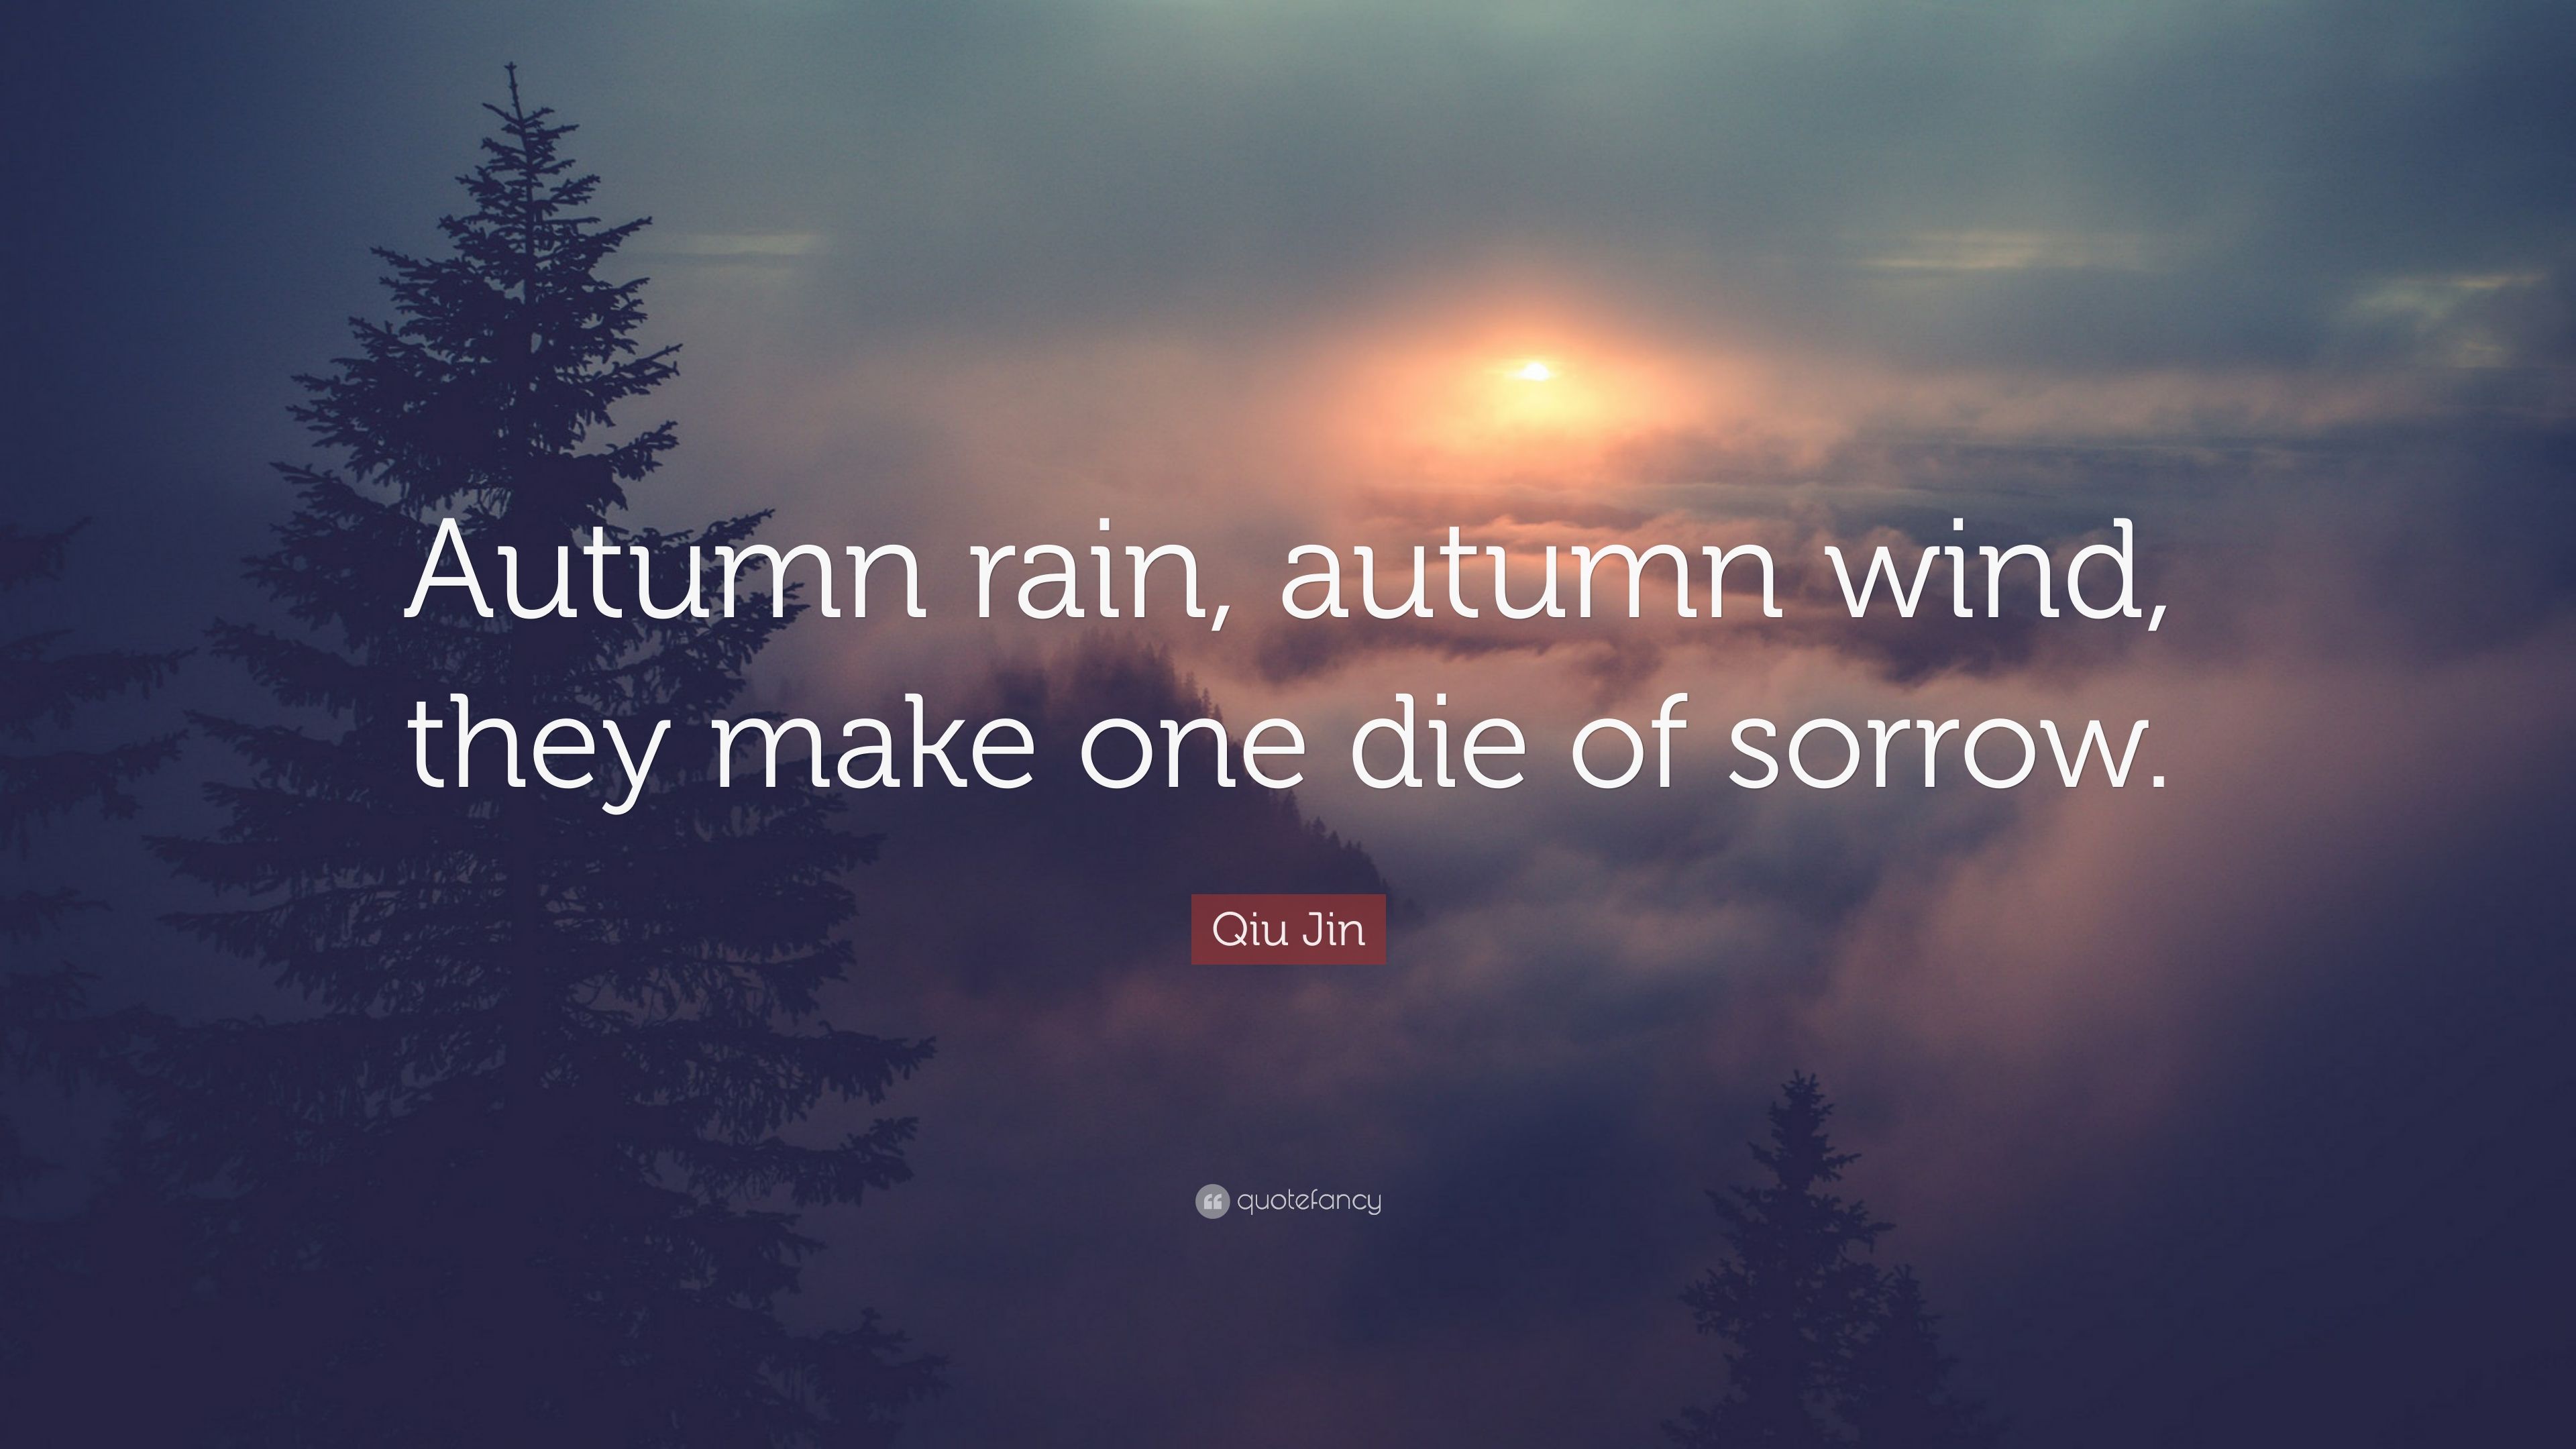 Qiu Jin Quote: "Autumn rain, autumn wind, they make one die of sorrow....